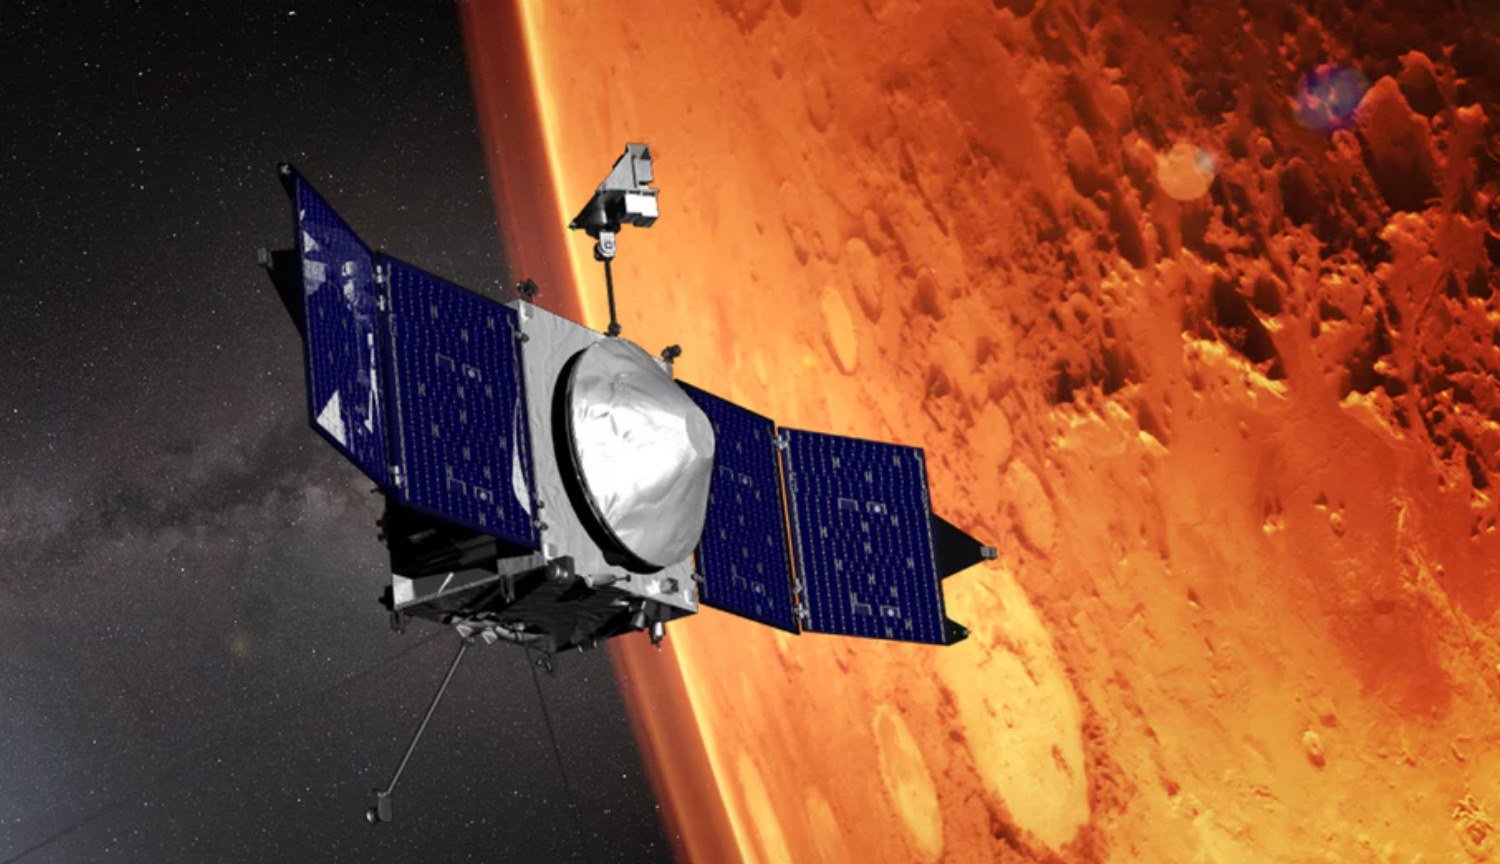 Que s'occupera de martian satellite MAVEN en 2020?